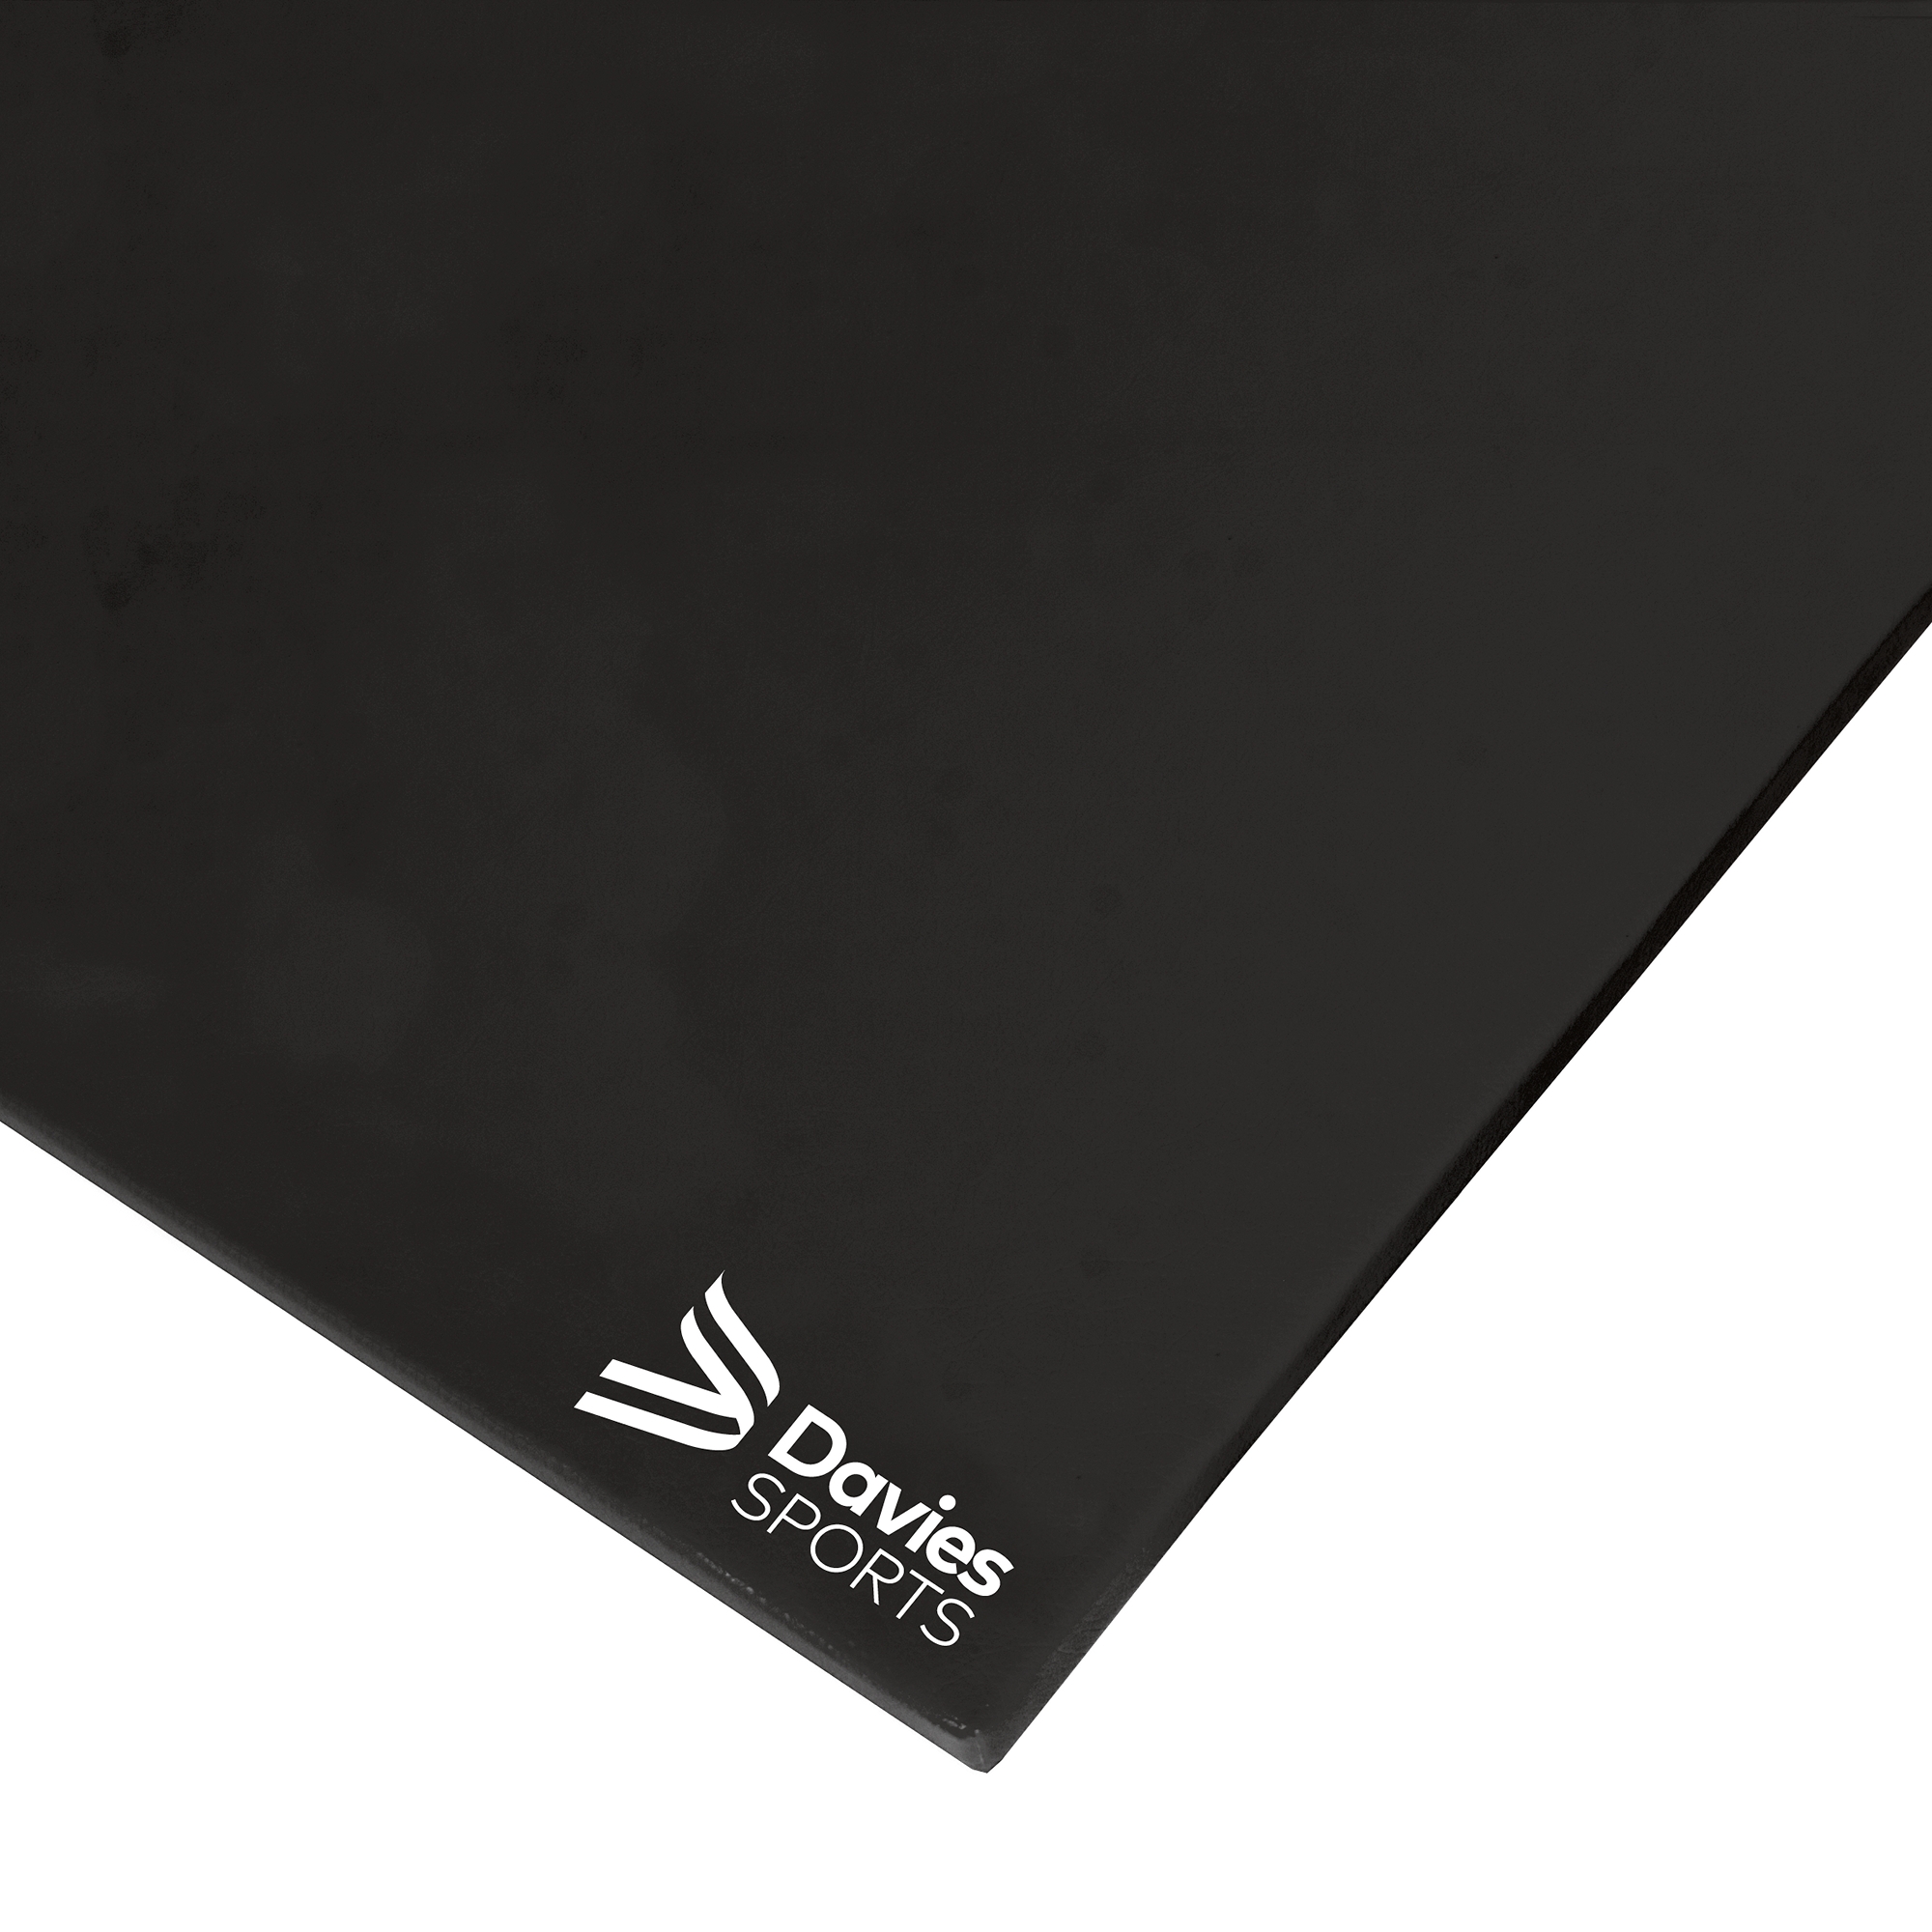 Davies Sports Lightweight Gym Mat Standard Black - 1.22m x 0.91m x 25mm